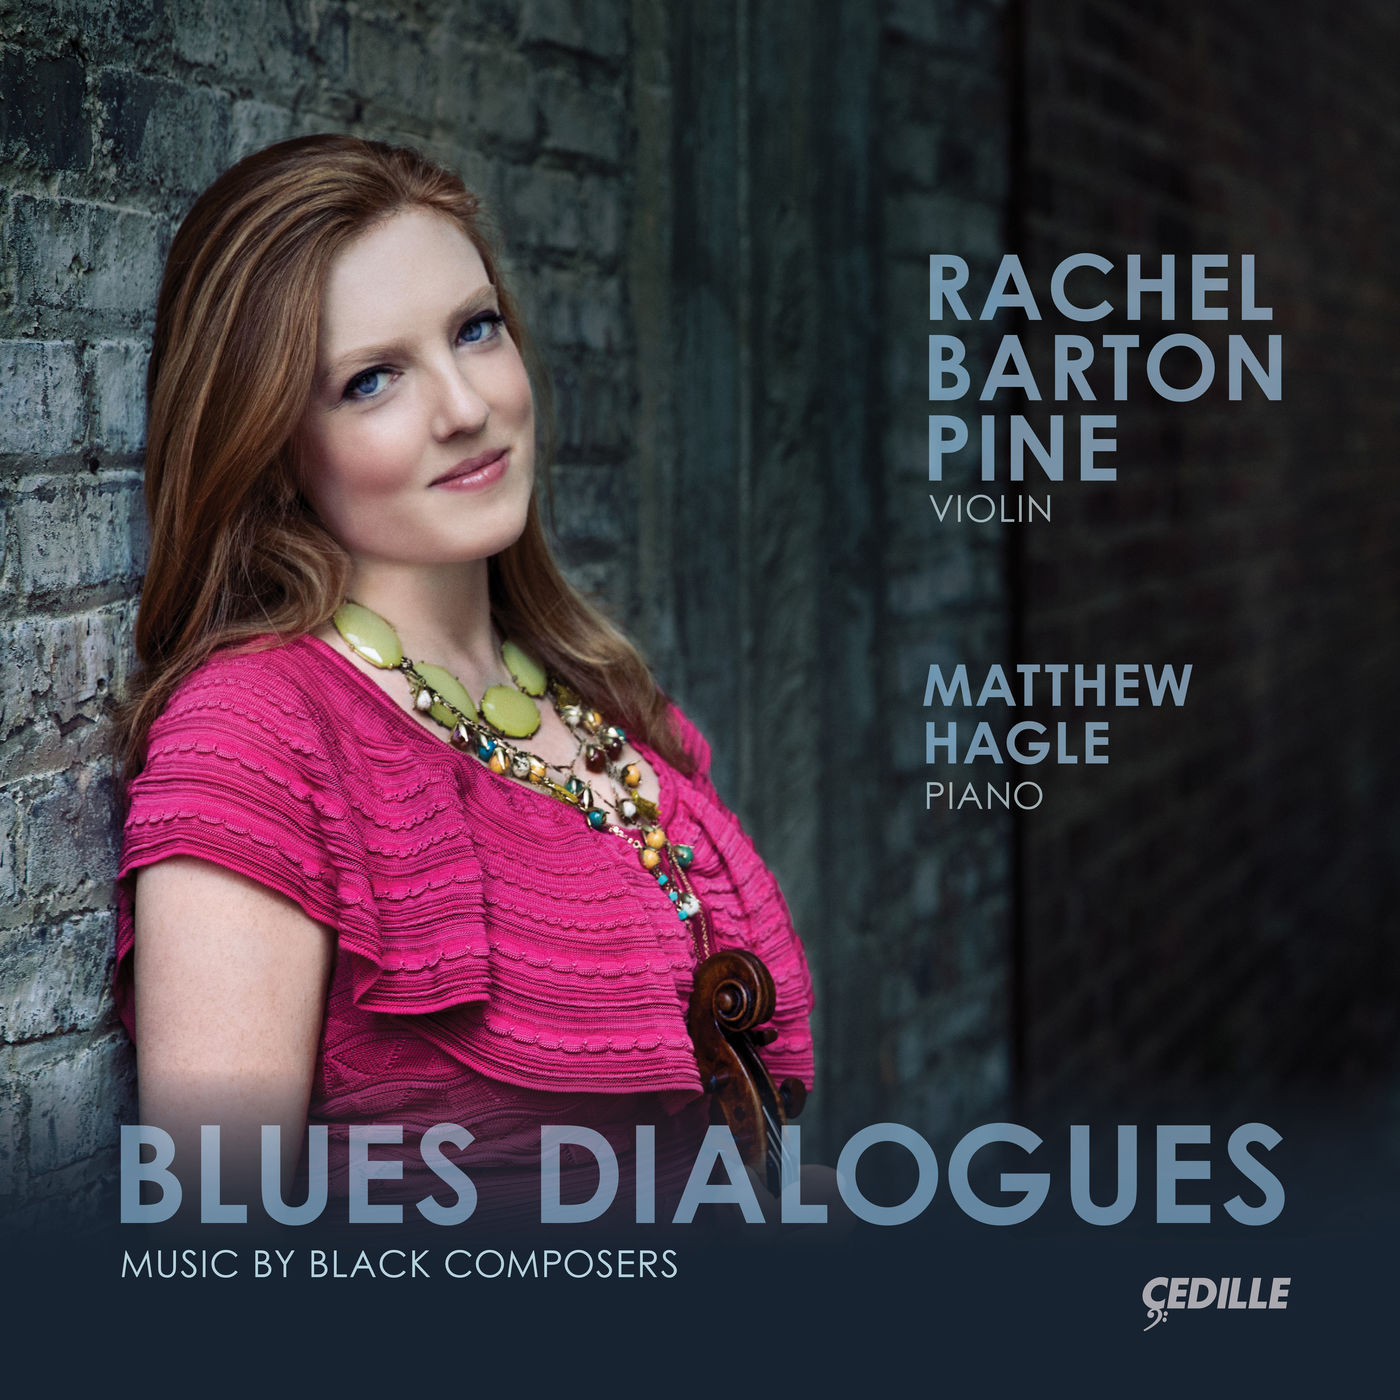 Rachel Barton Pine & Matthew Hagle - Blues Dialogues: Music by Black Composers (2018) [FLAC 24bit/96kHz]